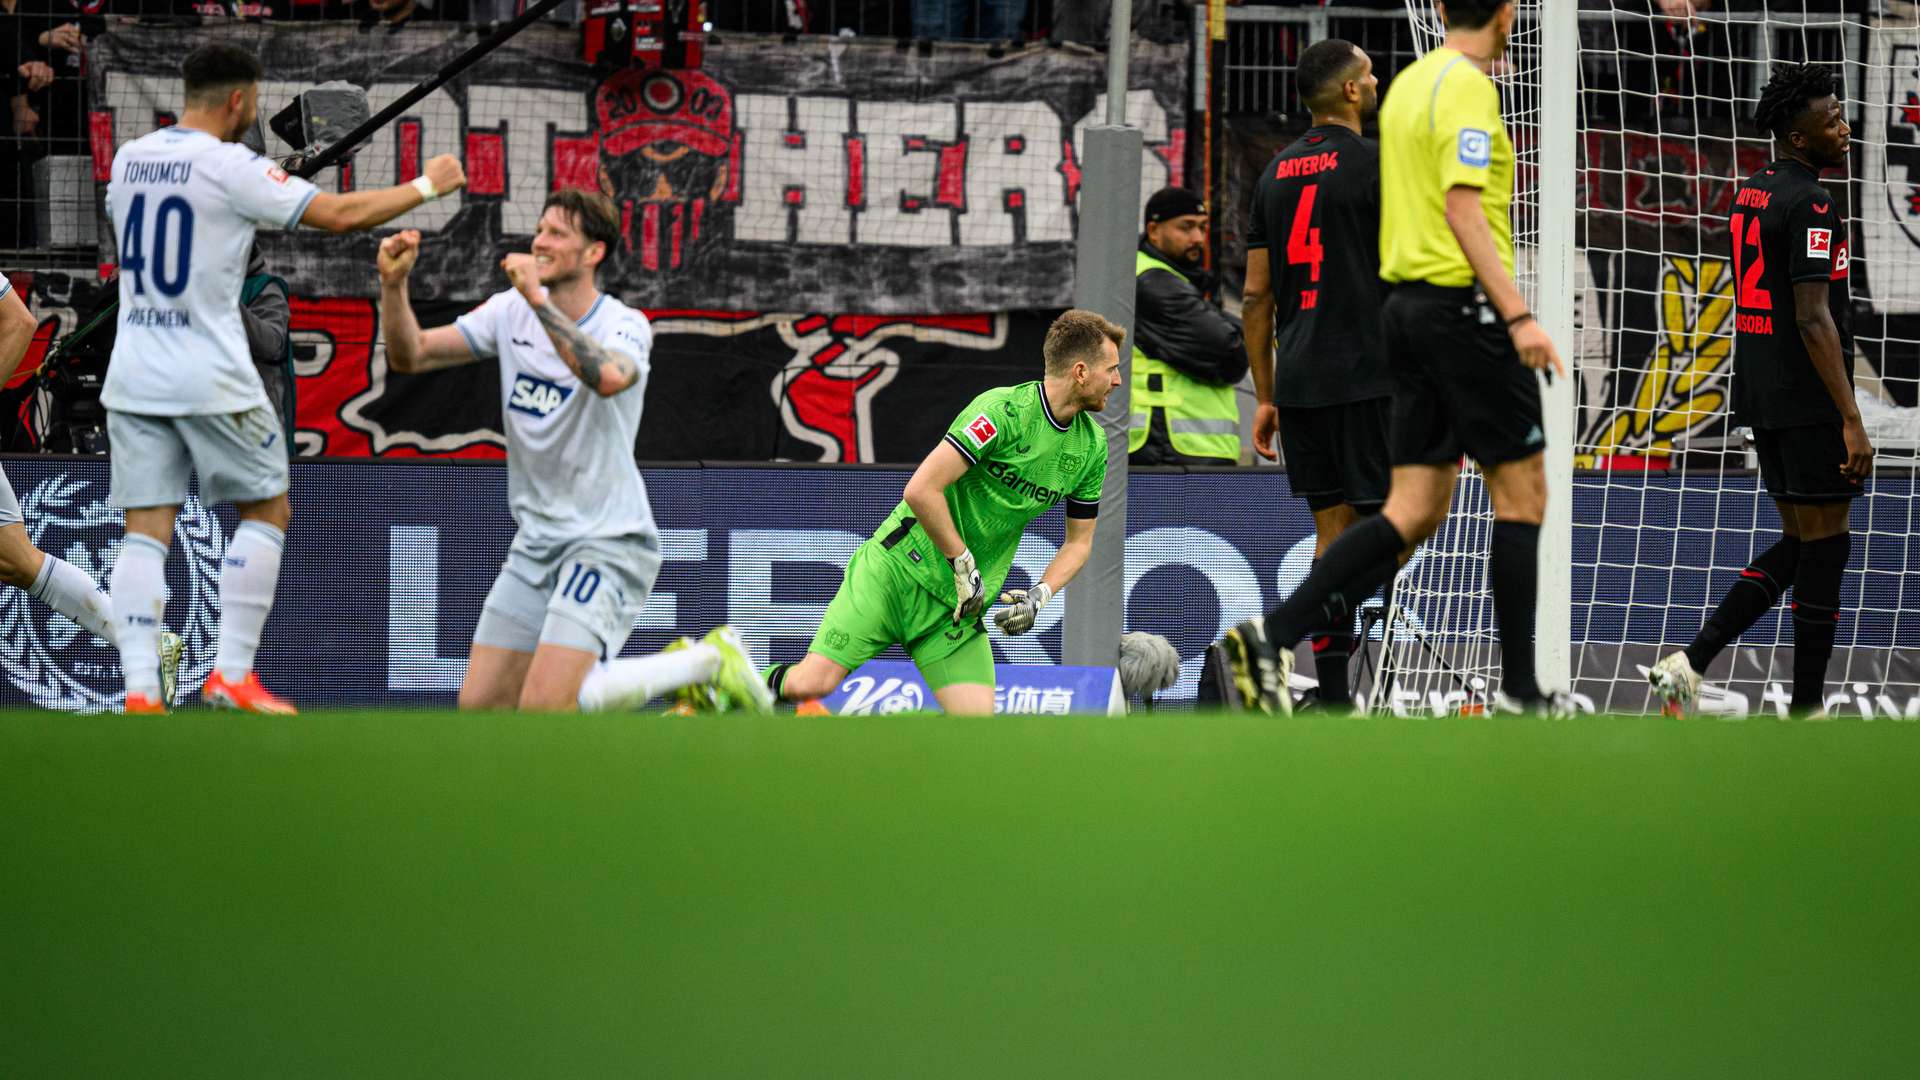 © Bayer 04 Leverkusen Fussball GmbH